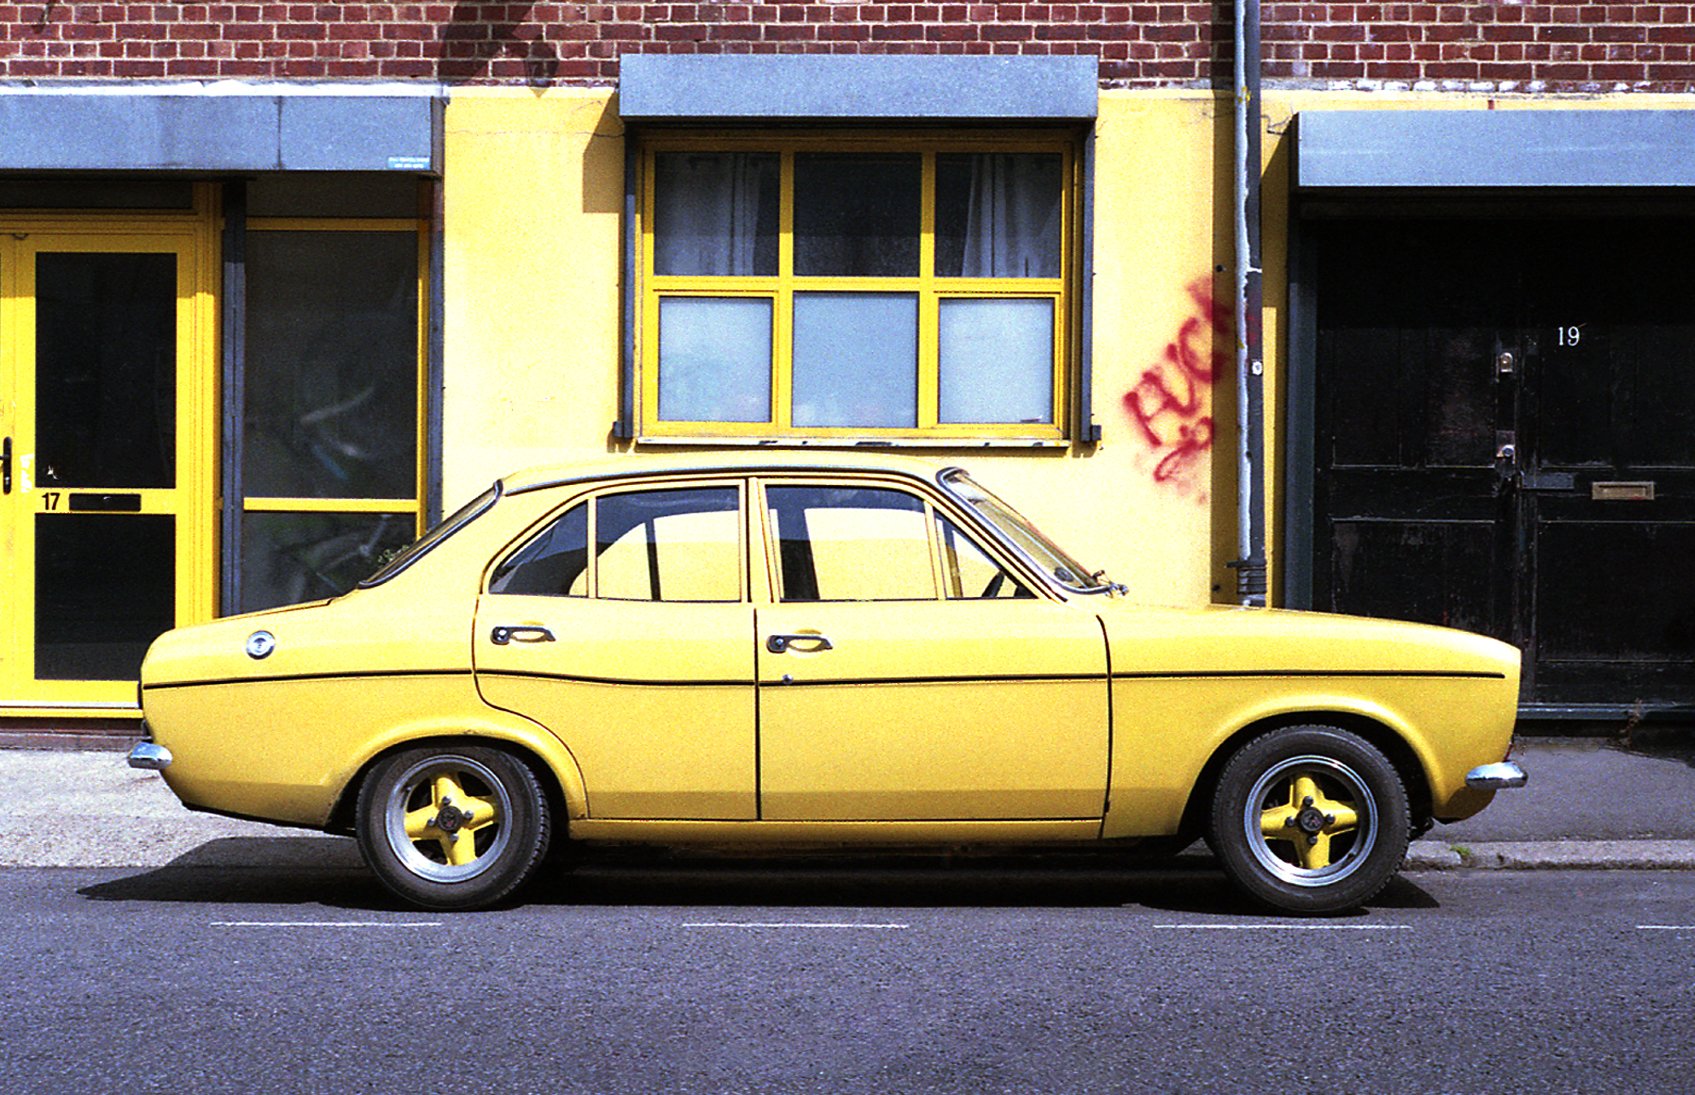  Yellow Ford Escort in London - UK 